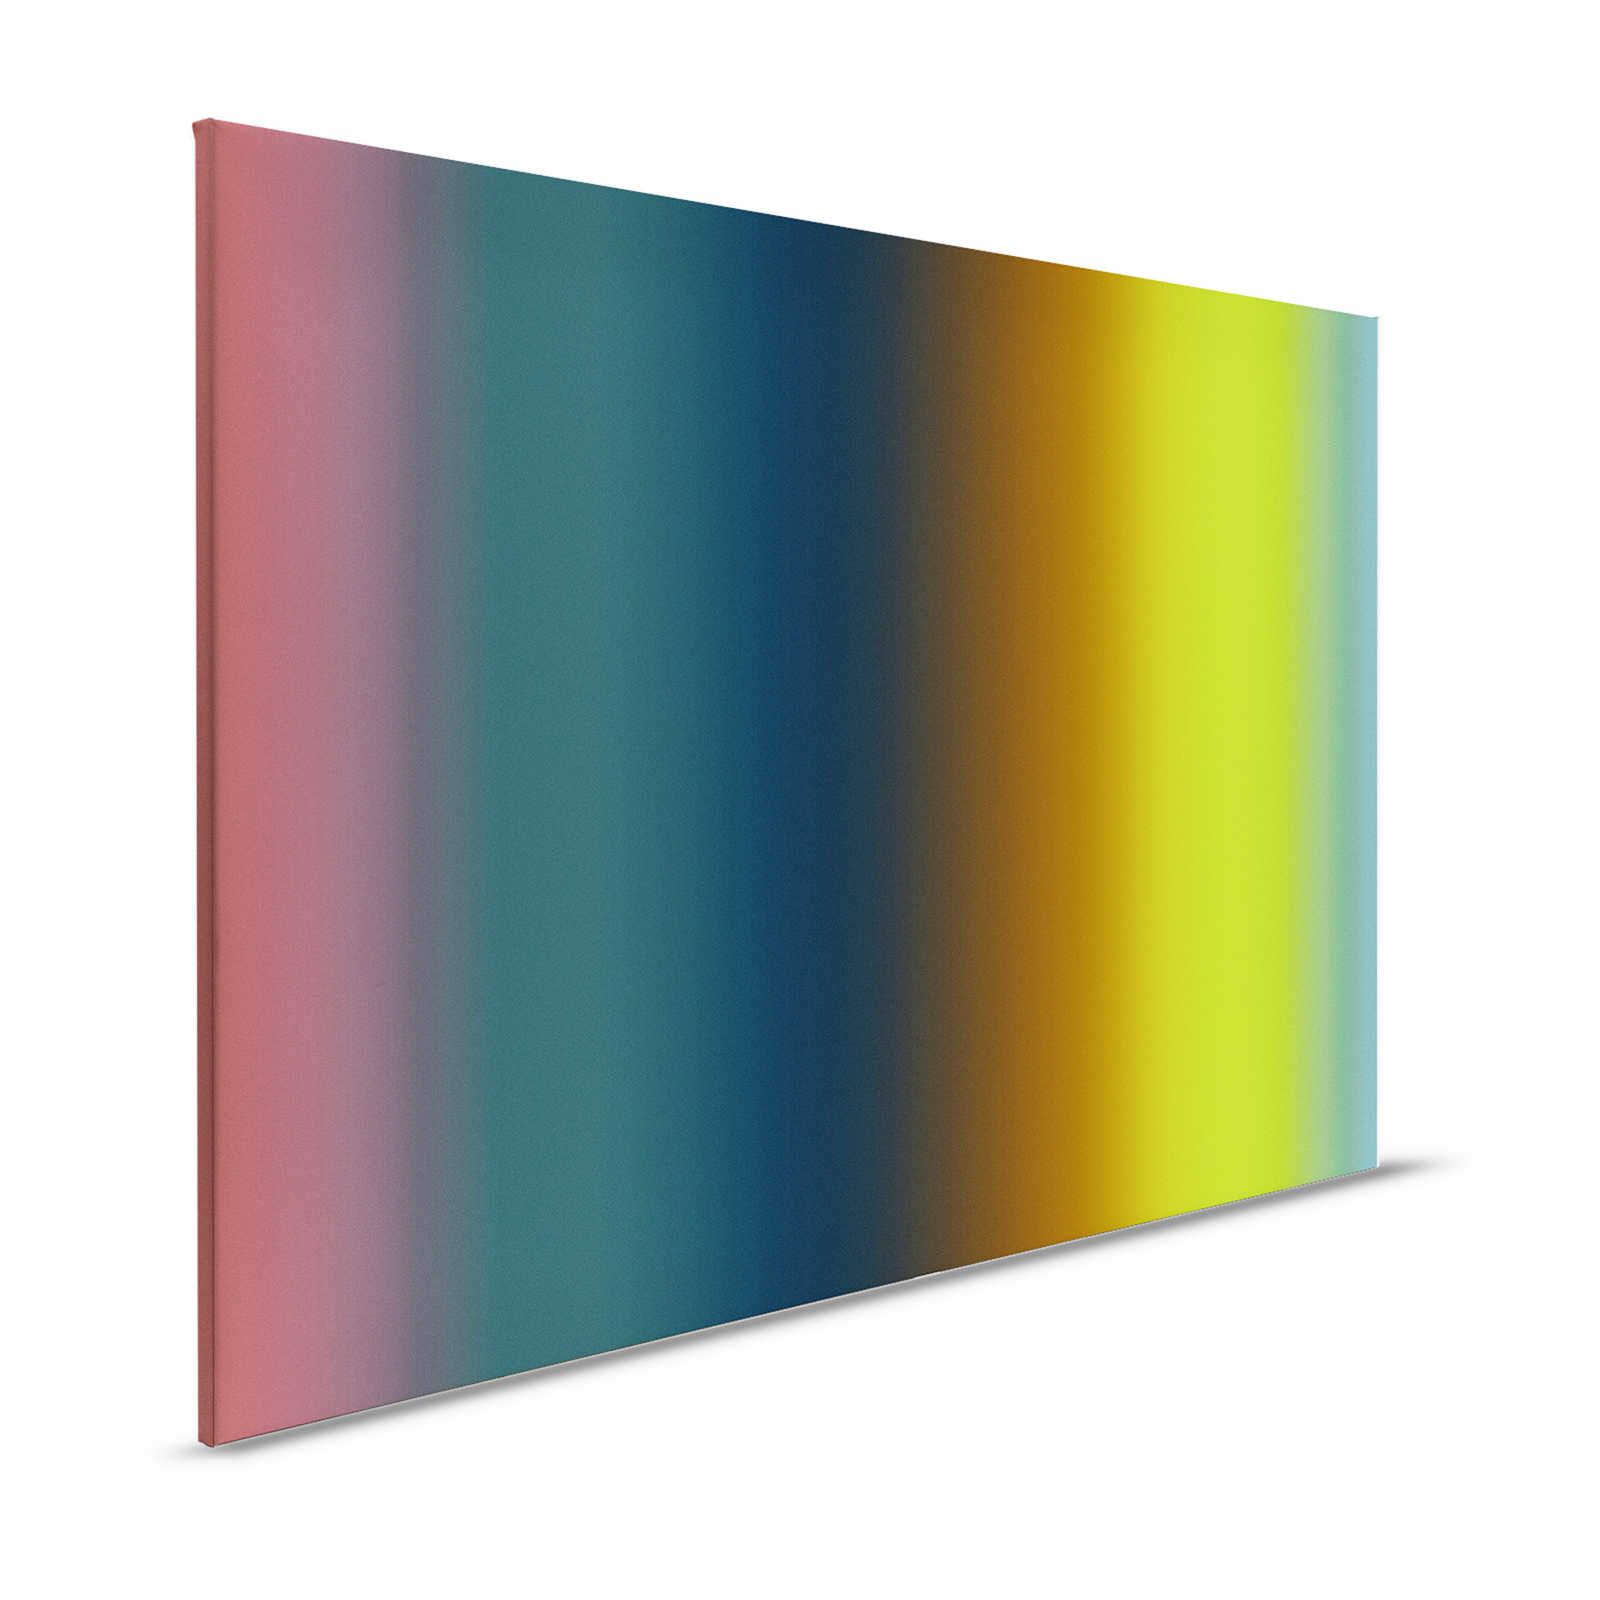 Over the Rainbow 1 - Canvas painting colour spectrum rainbow modern - 1,20 m x 0,80 m
